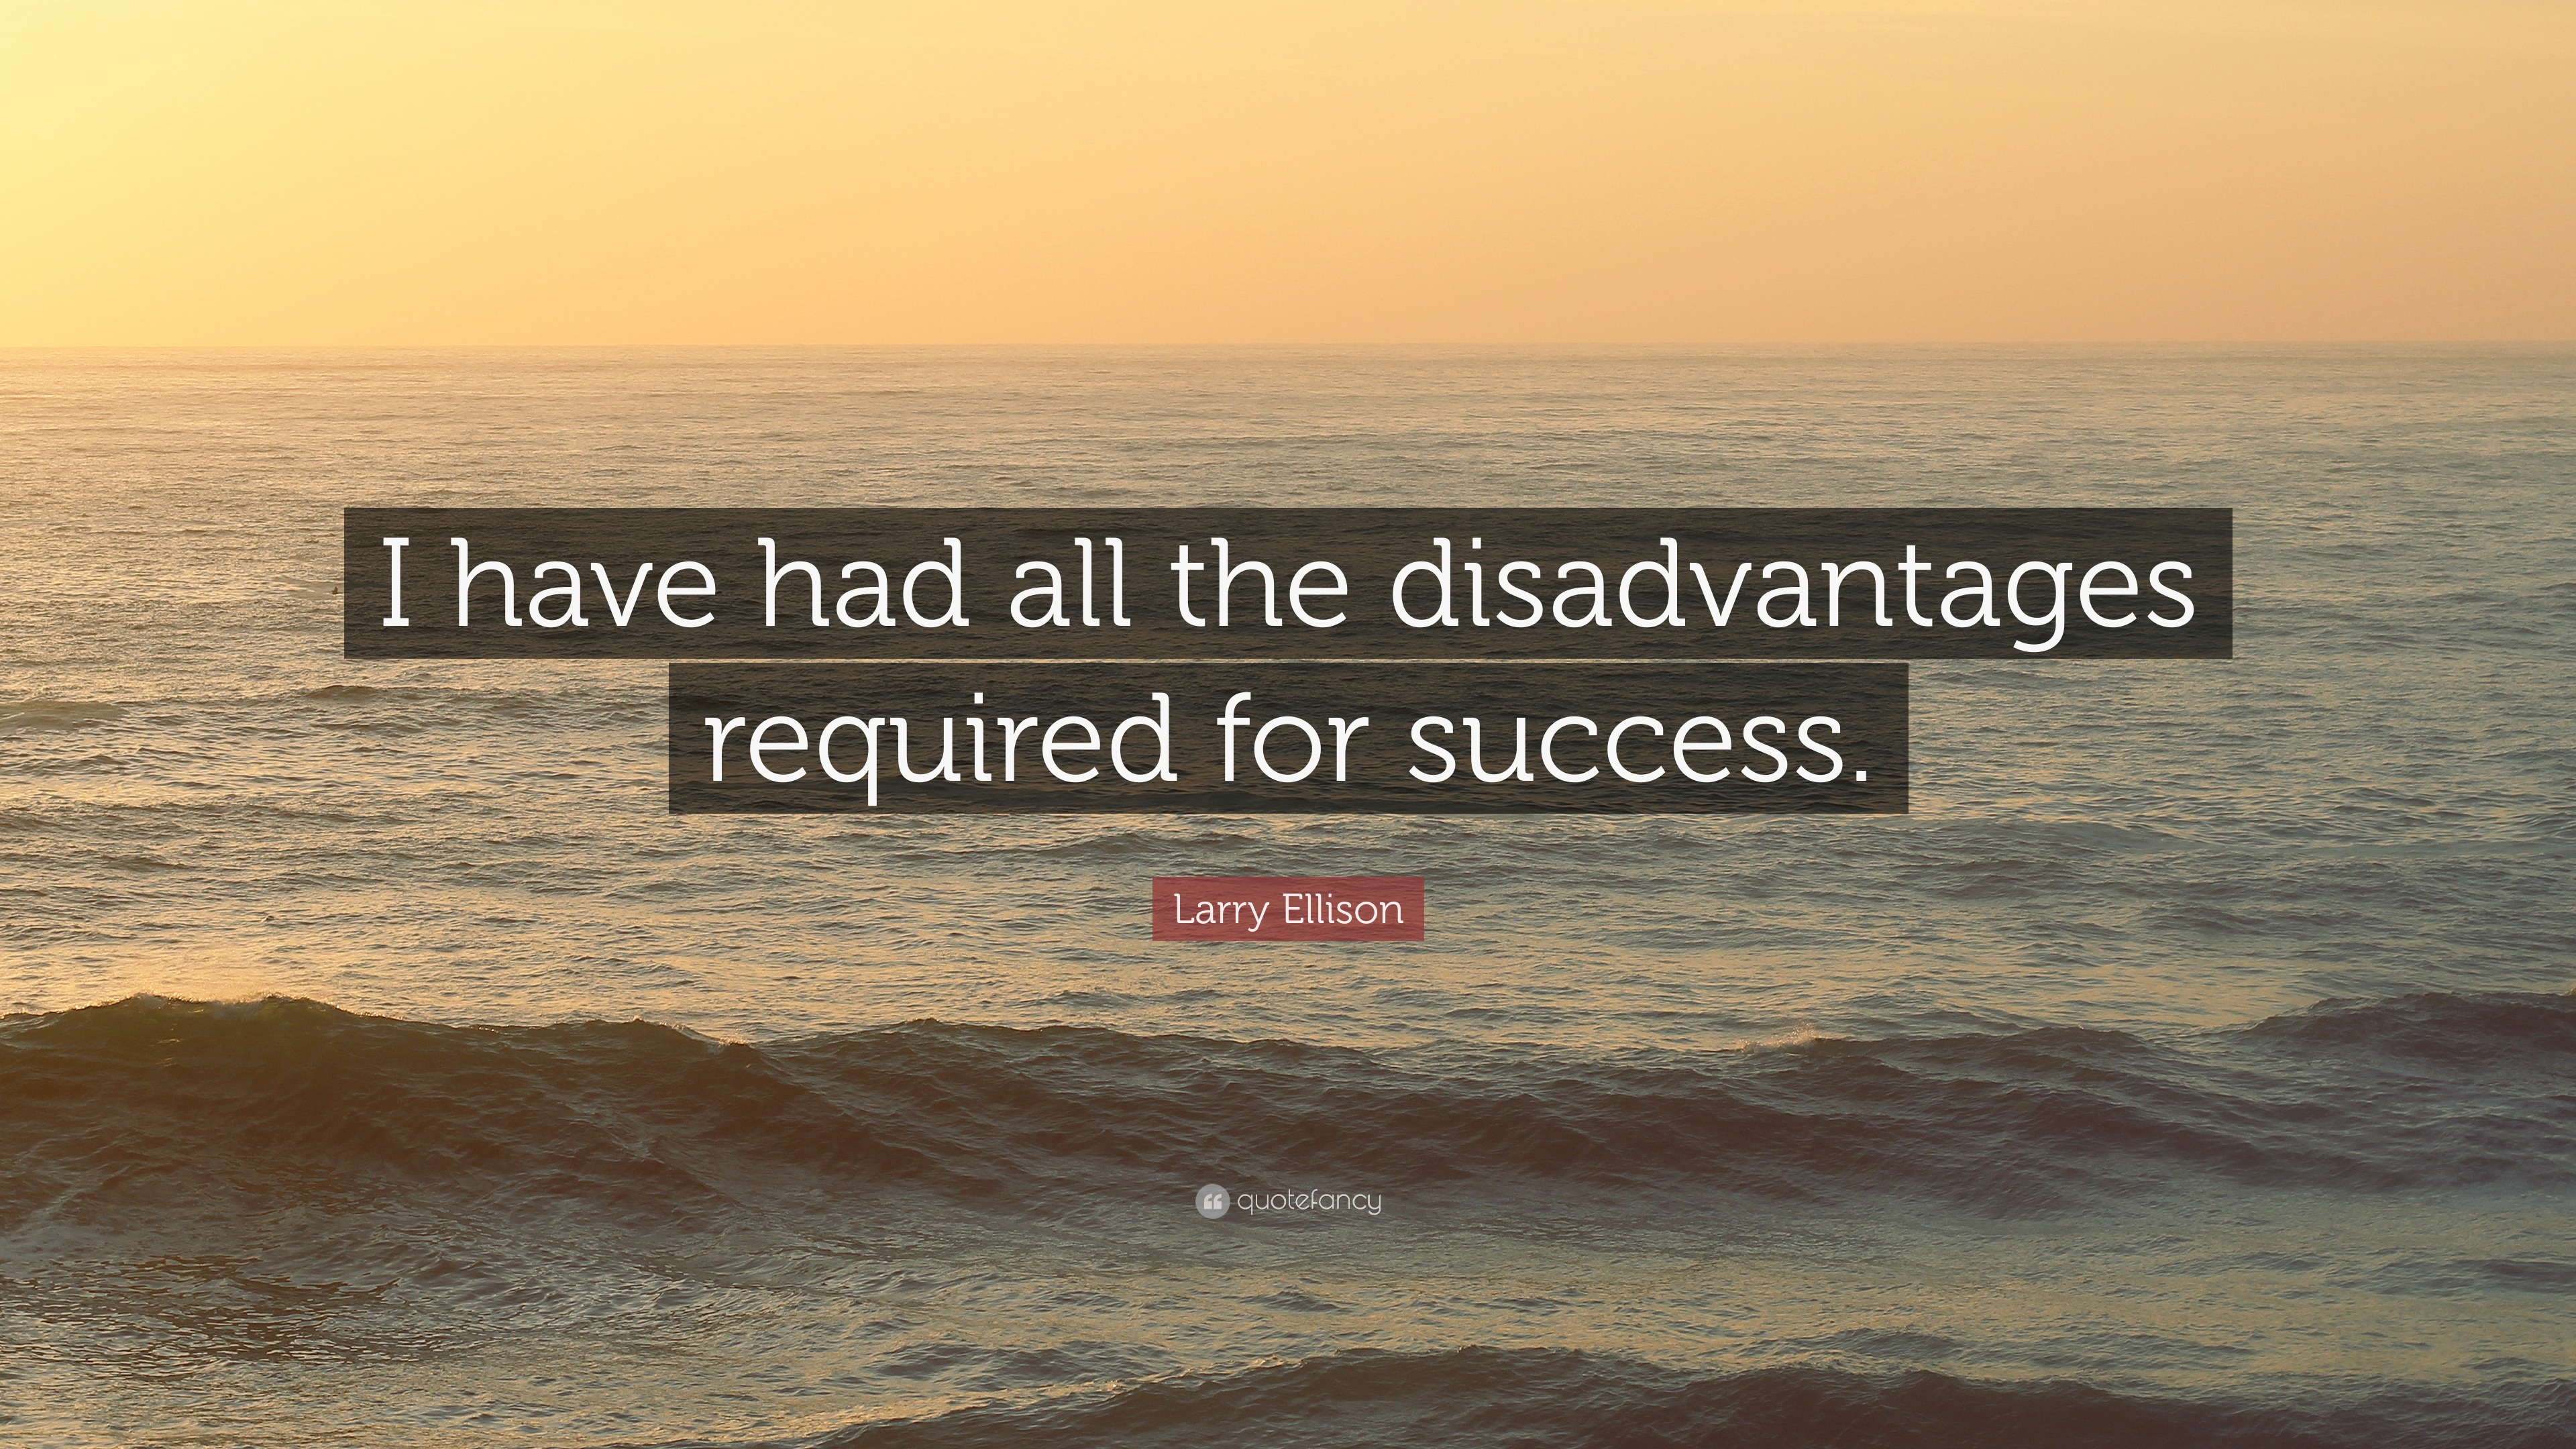 29 Larry Ellison Quotes on Success (ORACLE)